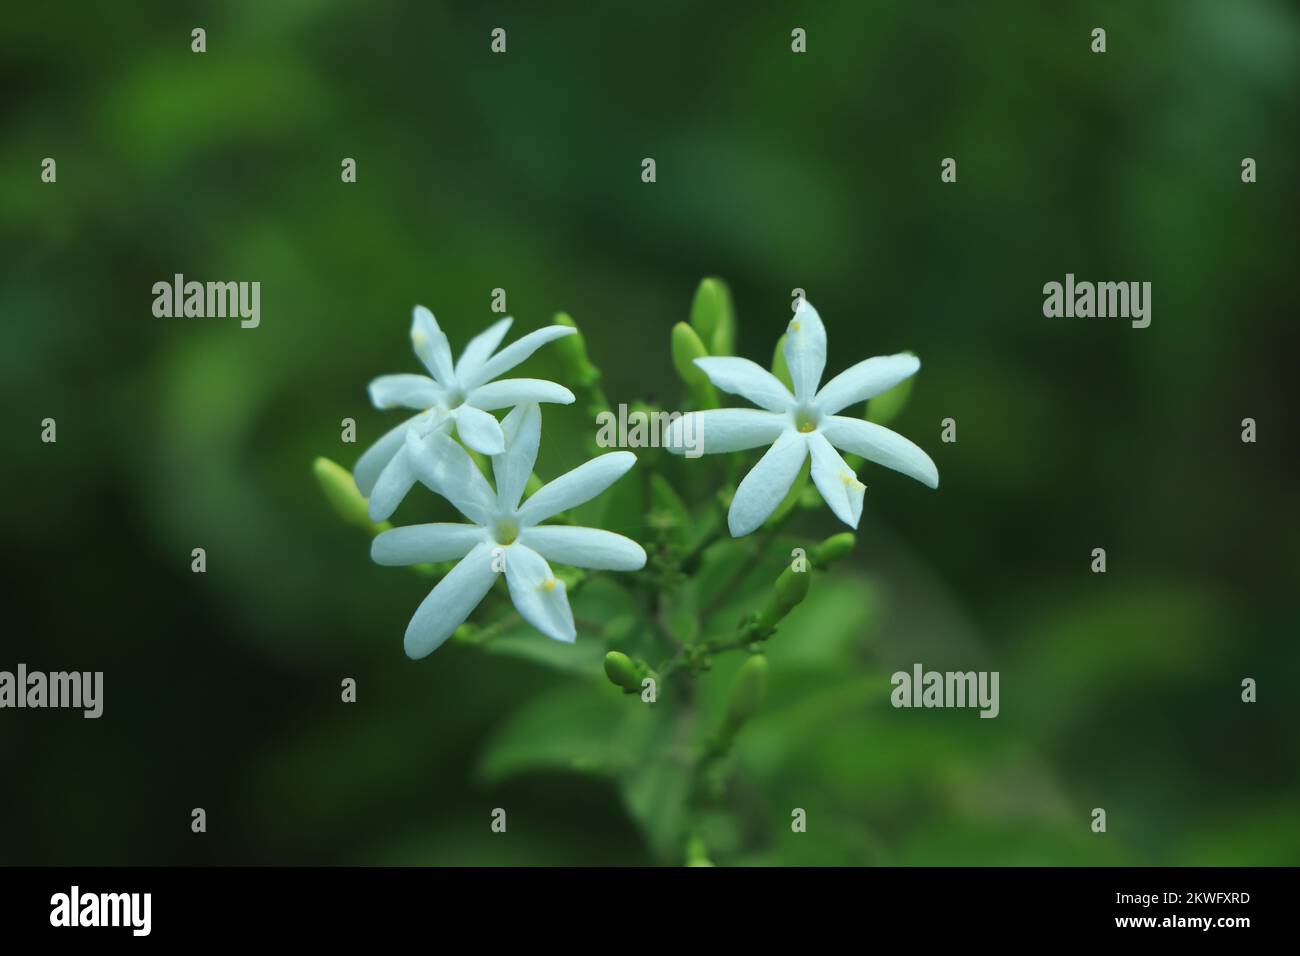 Flores chinas nombres fotografías e imágenes de alta resolución - Alamy